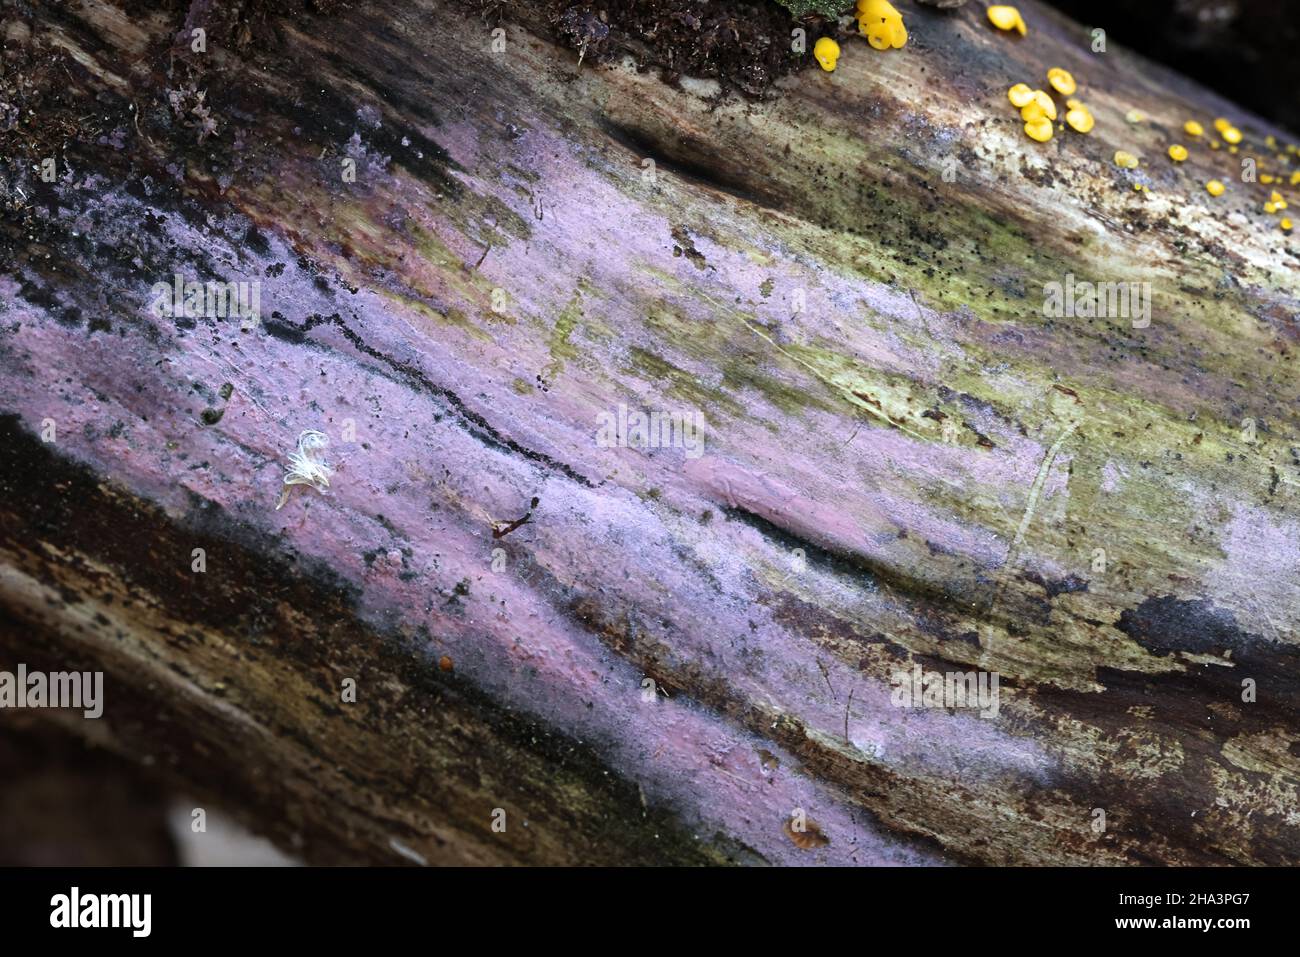 Tulasnella violacea, a lilac crust fungus from Finland, no common English name Stock Photo